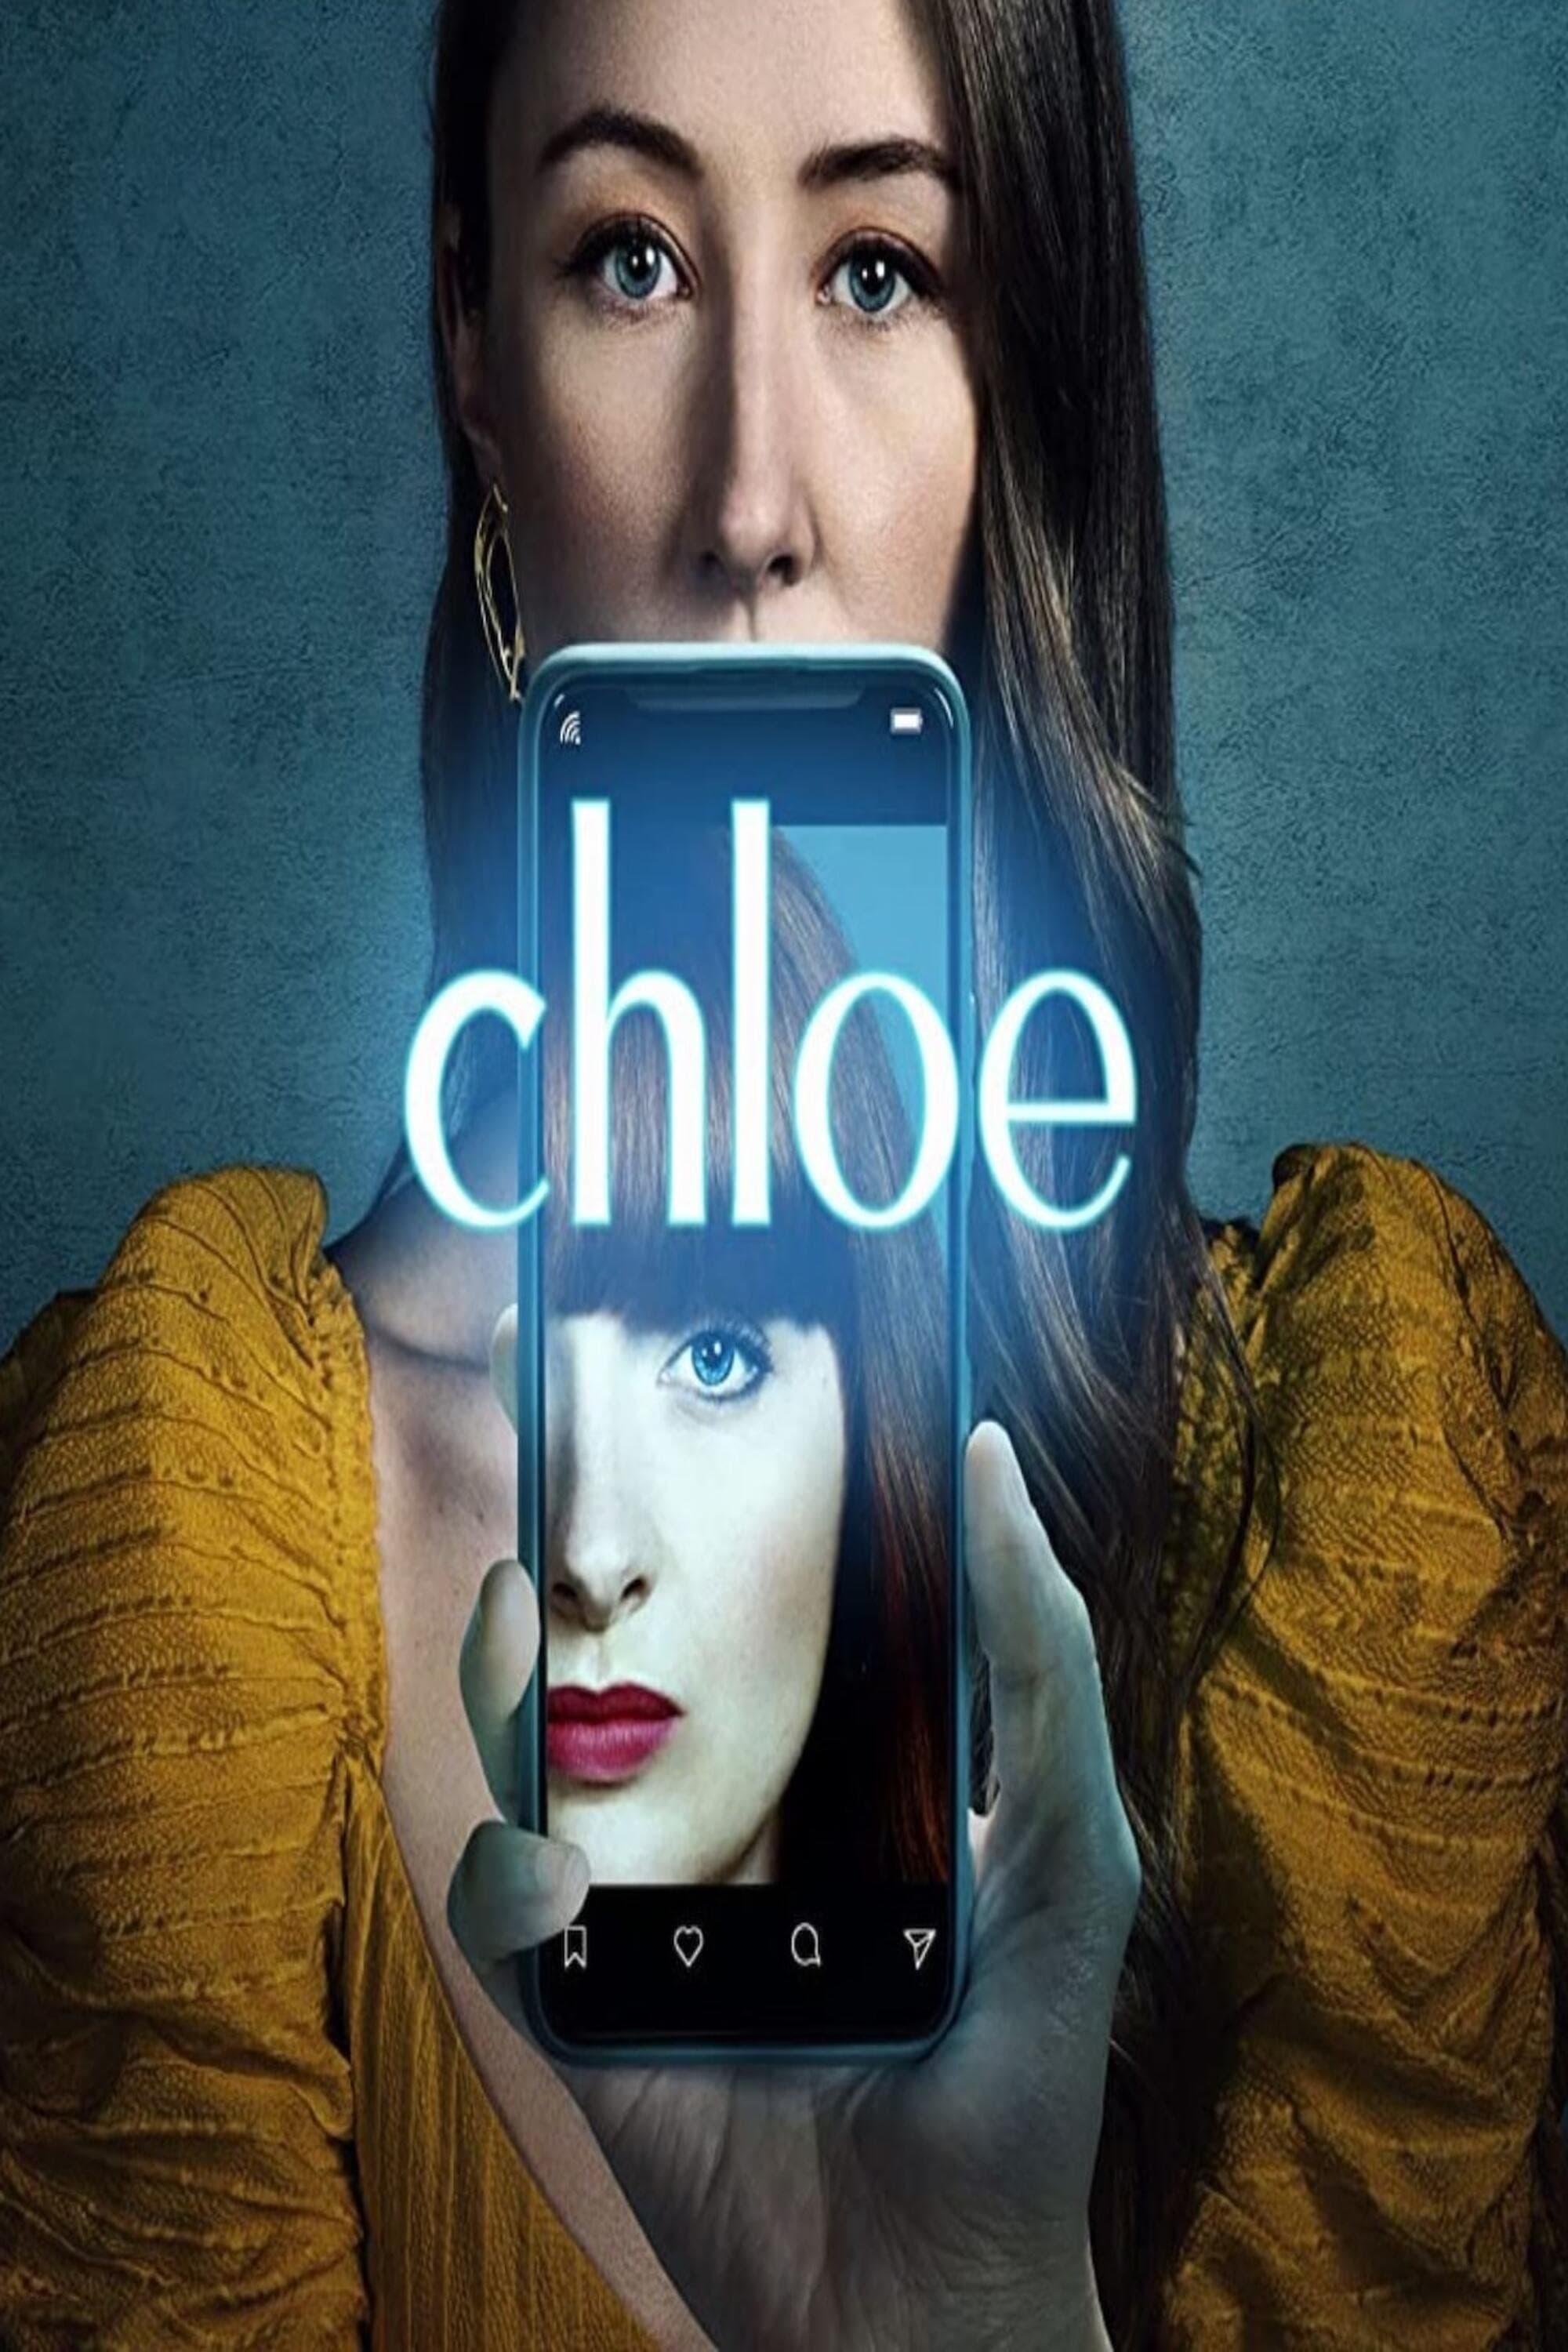 Chloe poster